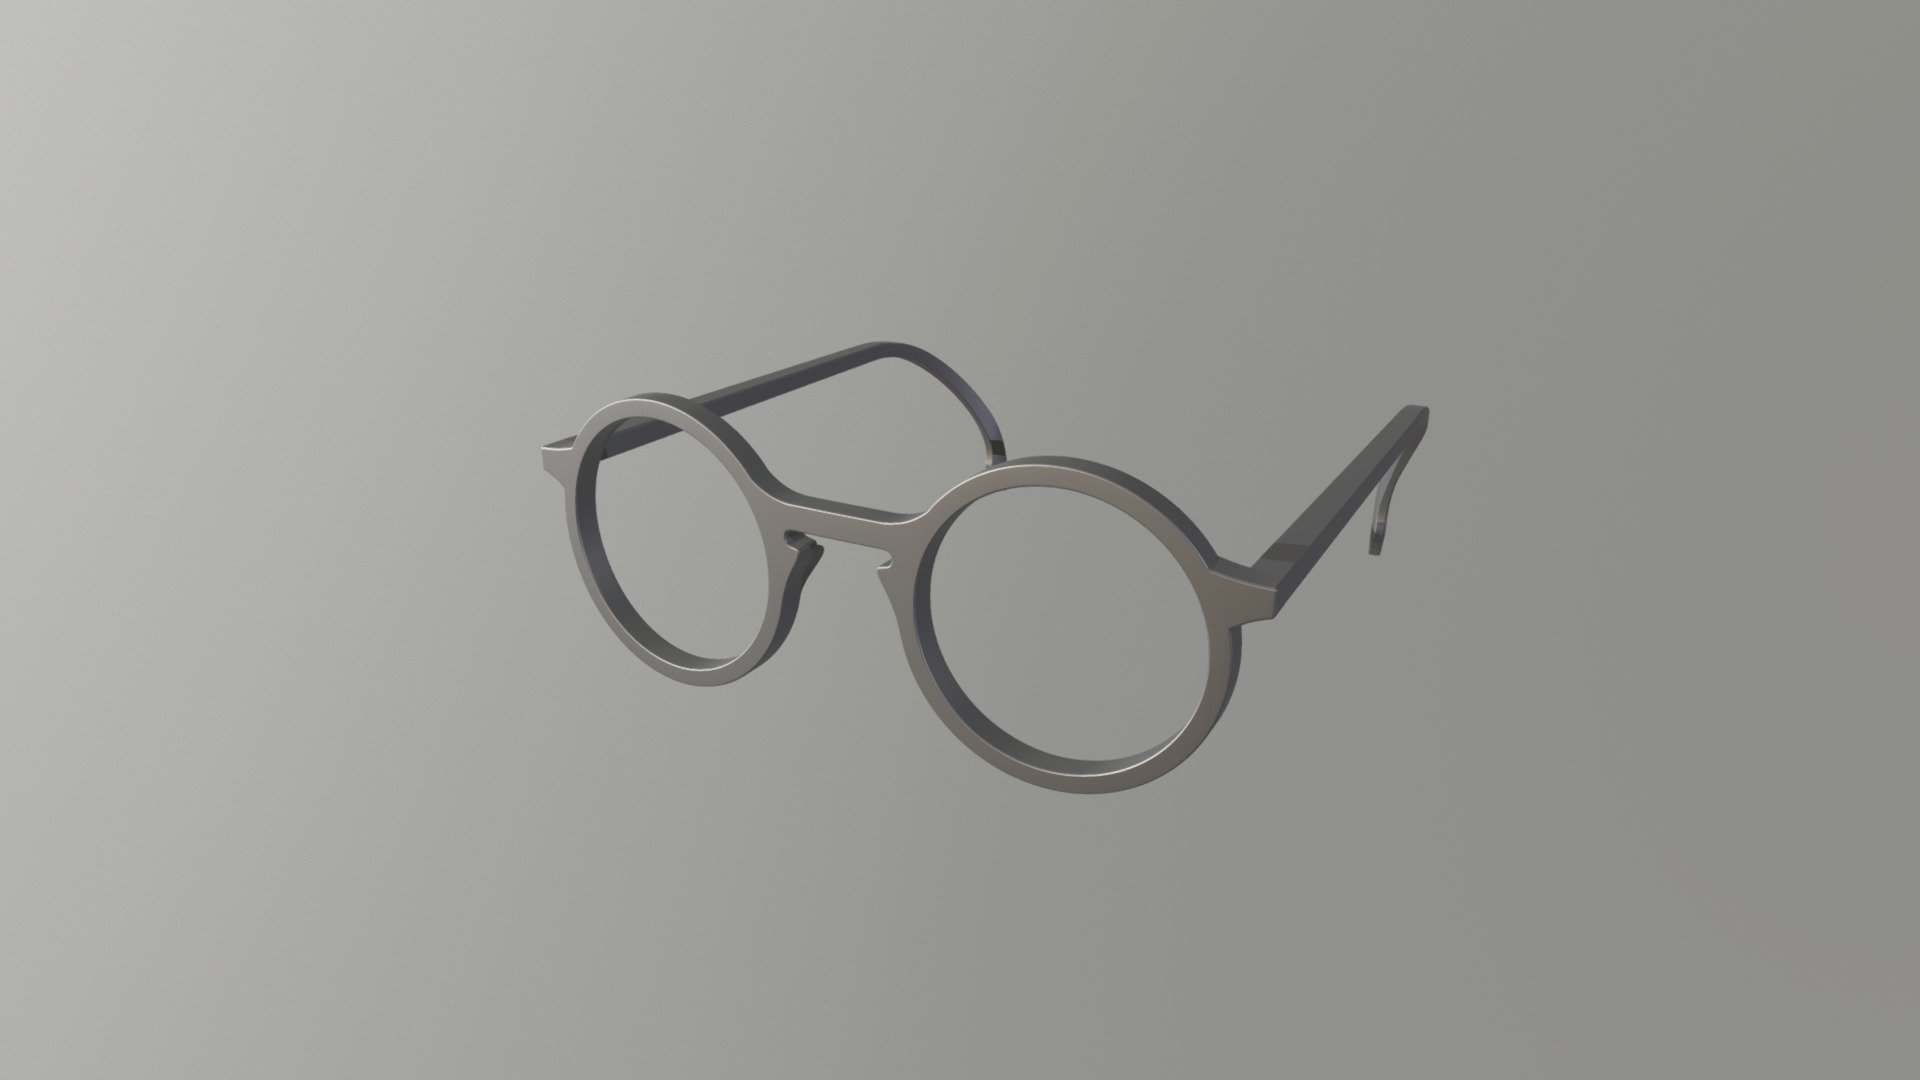 Karls Ken Glasses 2 - 3D model by nzo (@nzo3d) 3d model